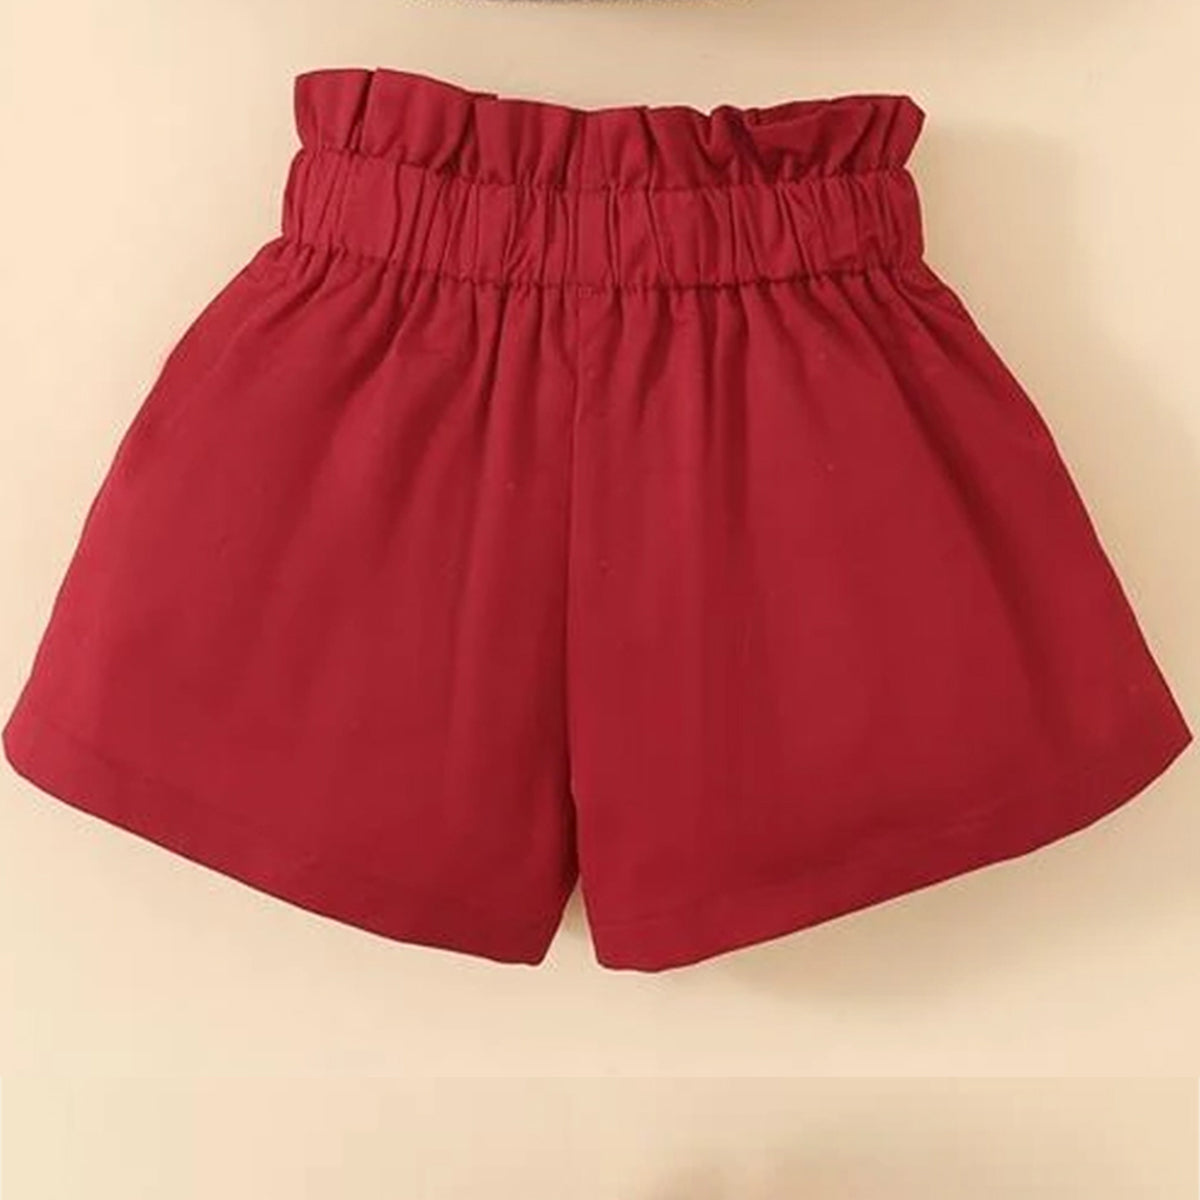 Maroon Stylish Shorts For Baby Girls.